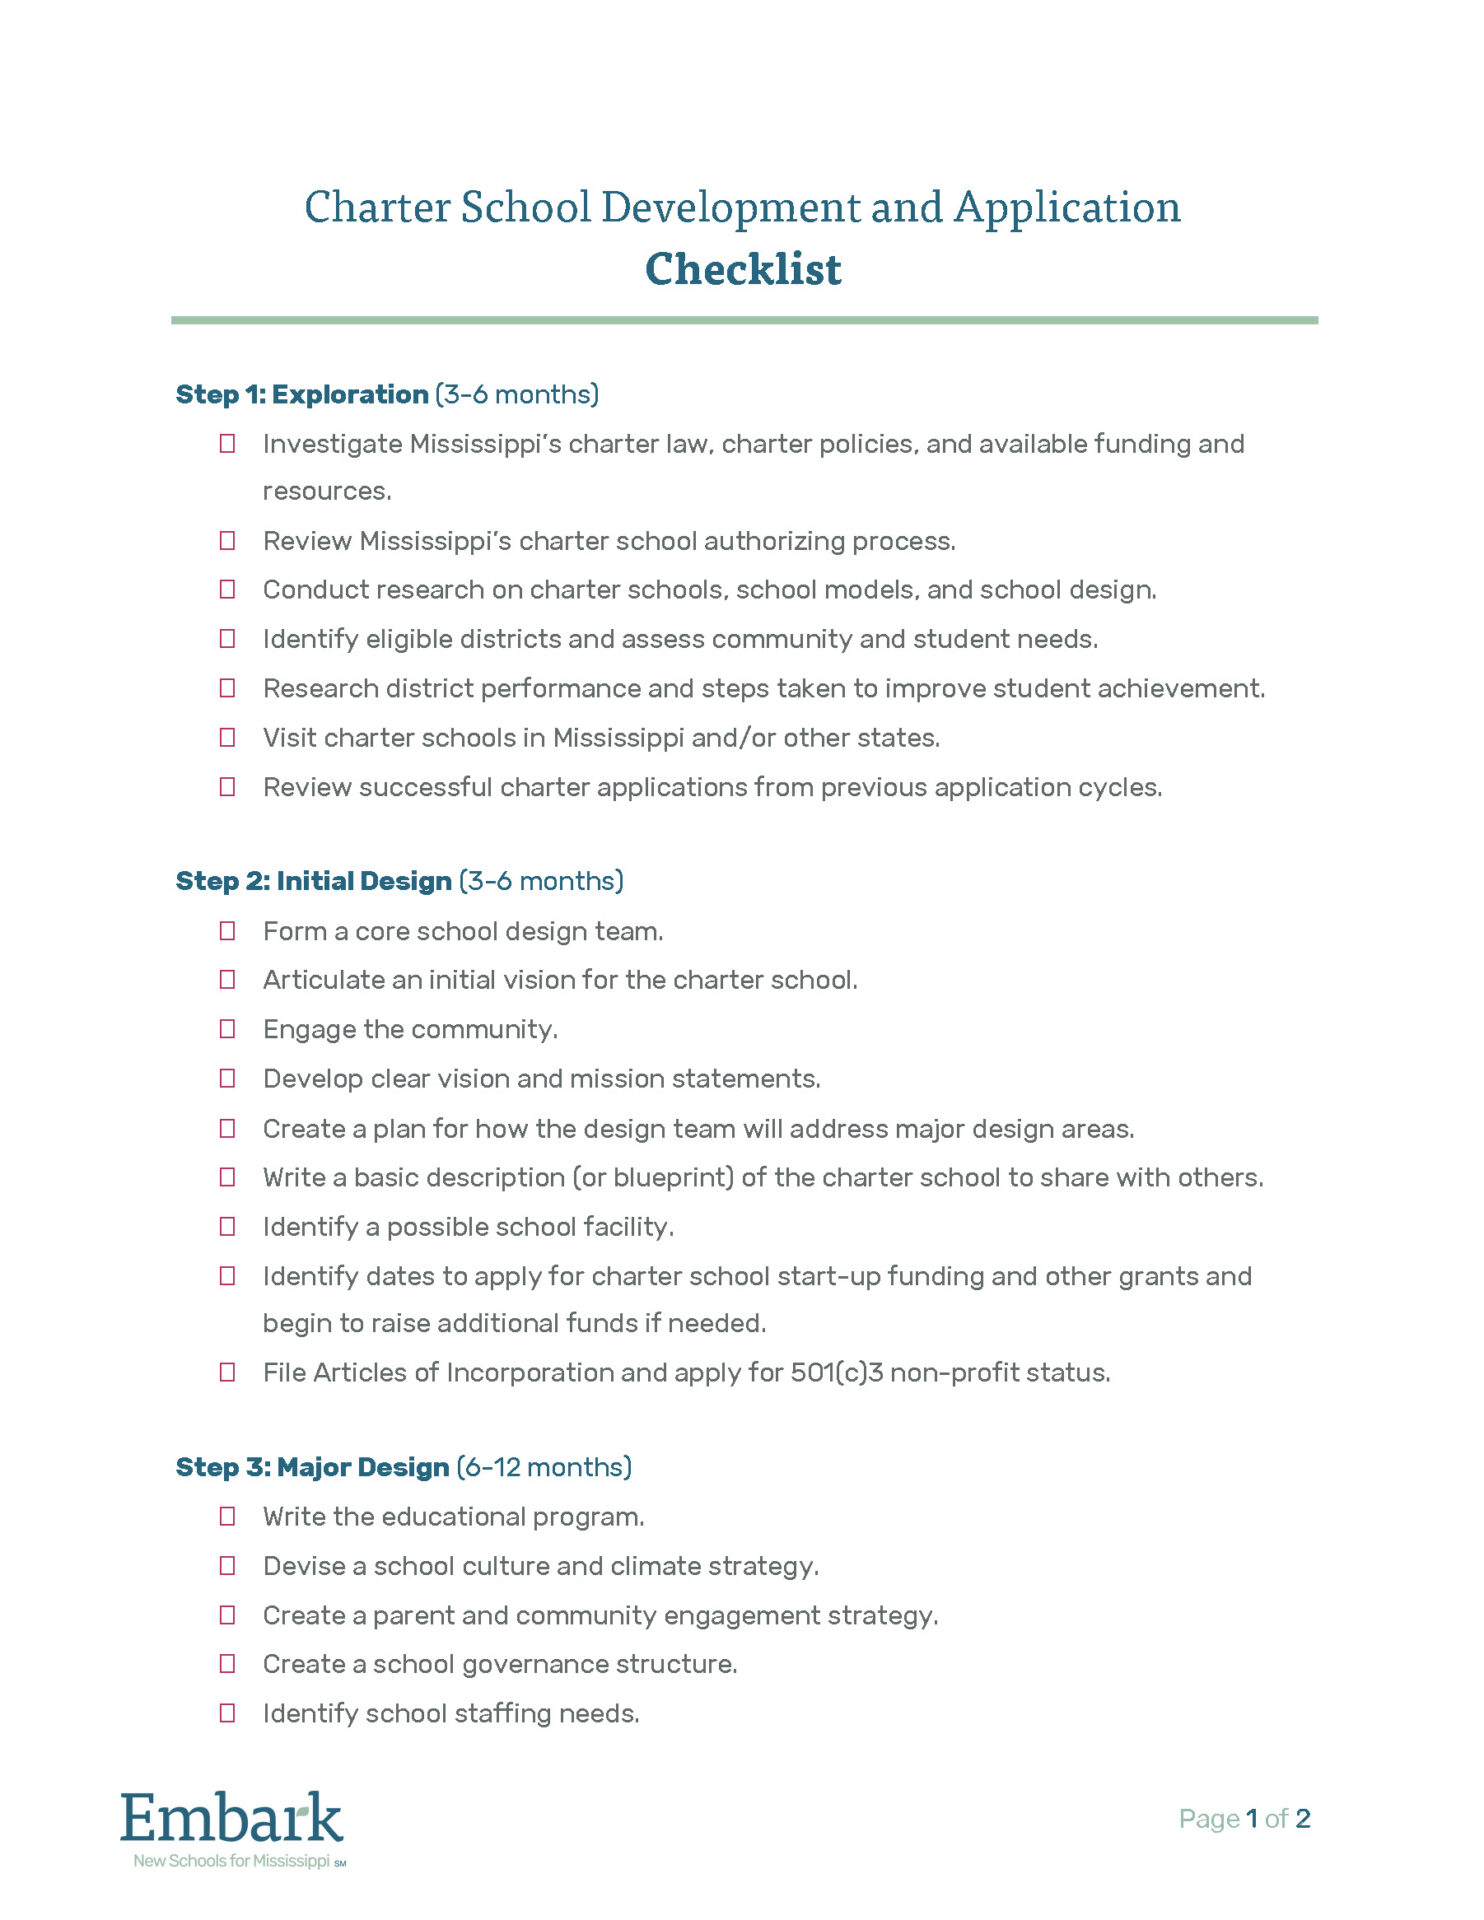 Charter School Development and App Checklist_Page_1